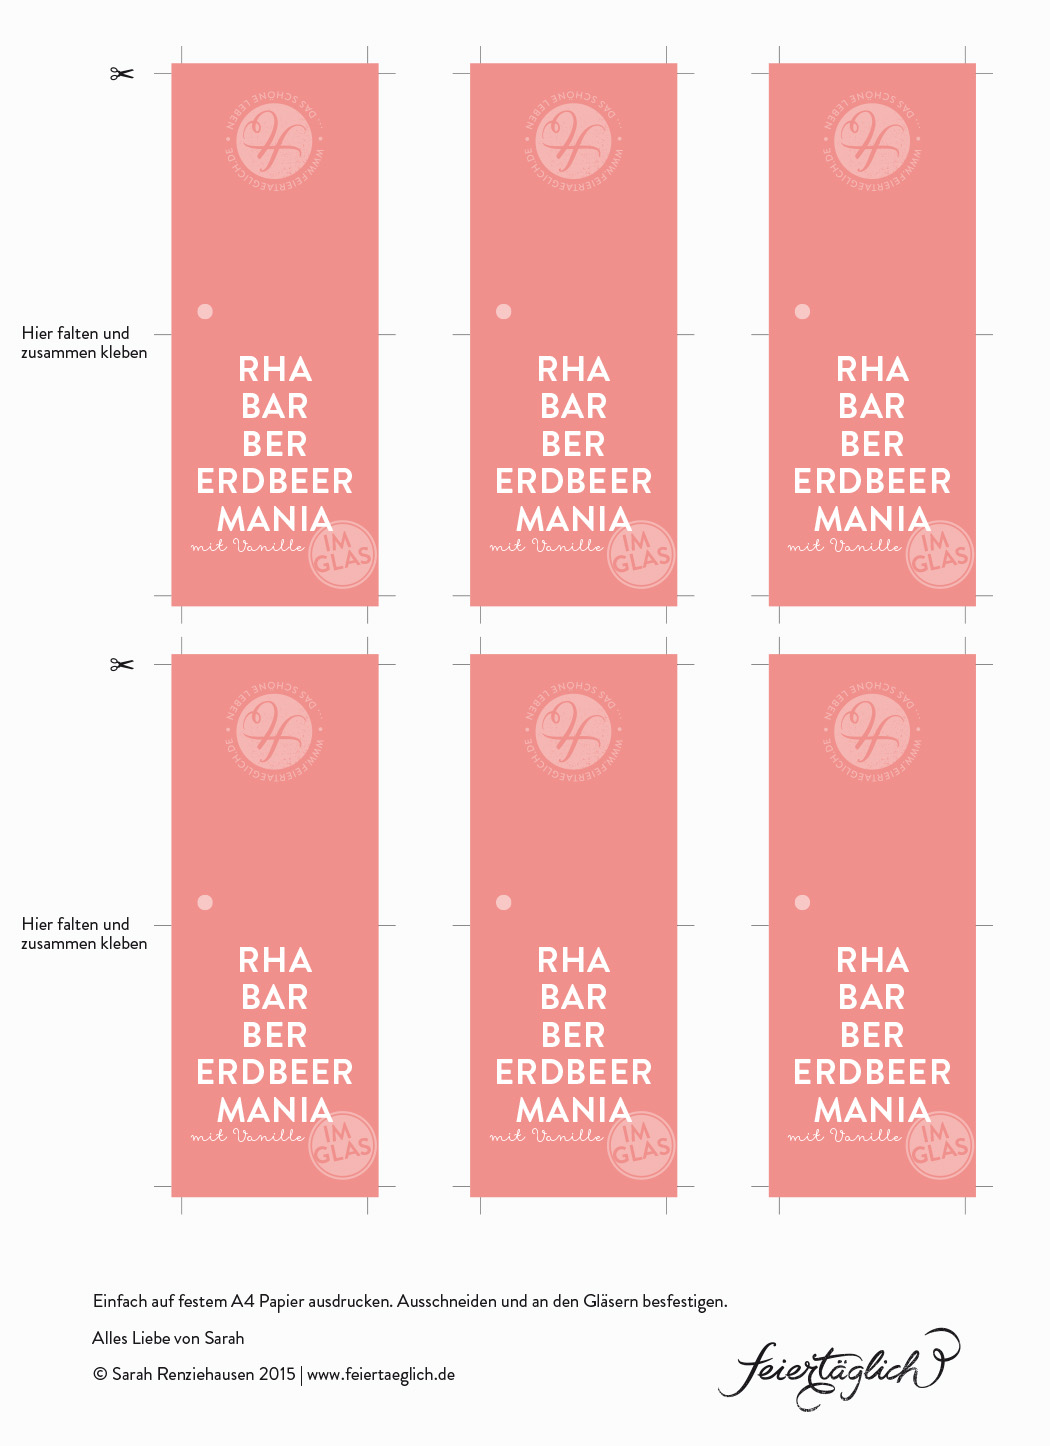 Rezept für Rhabarber-Erdbeer-Vanille Marmelade, Free Printable Labels, DIY #freeprintables #RhaBarBerMania #feiertaeglich